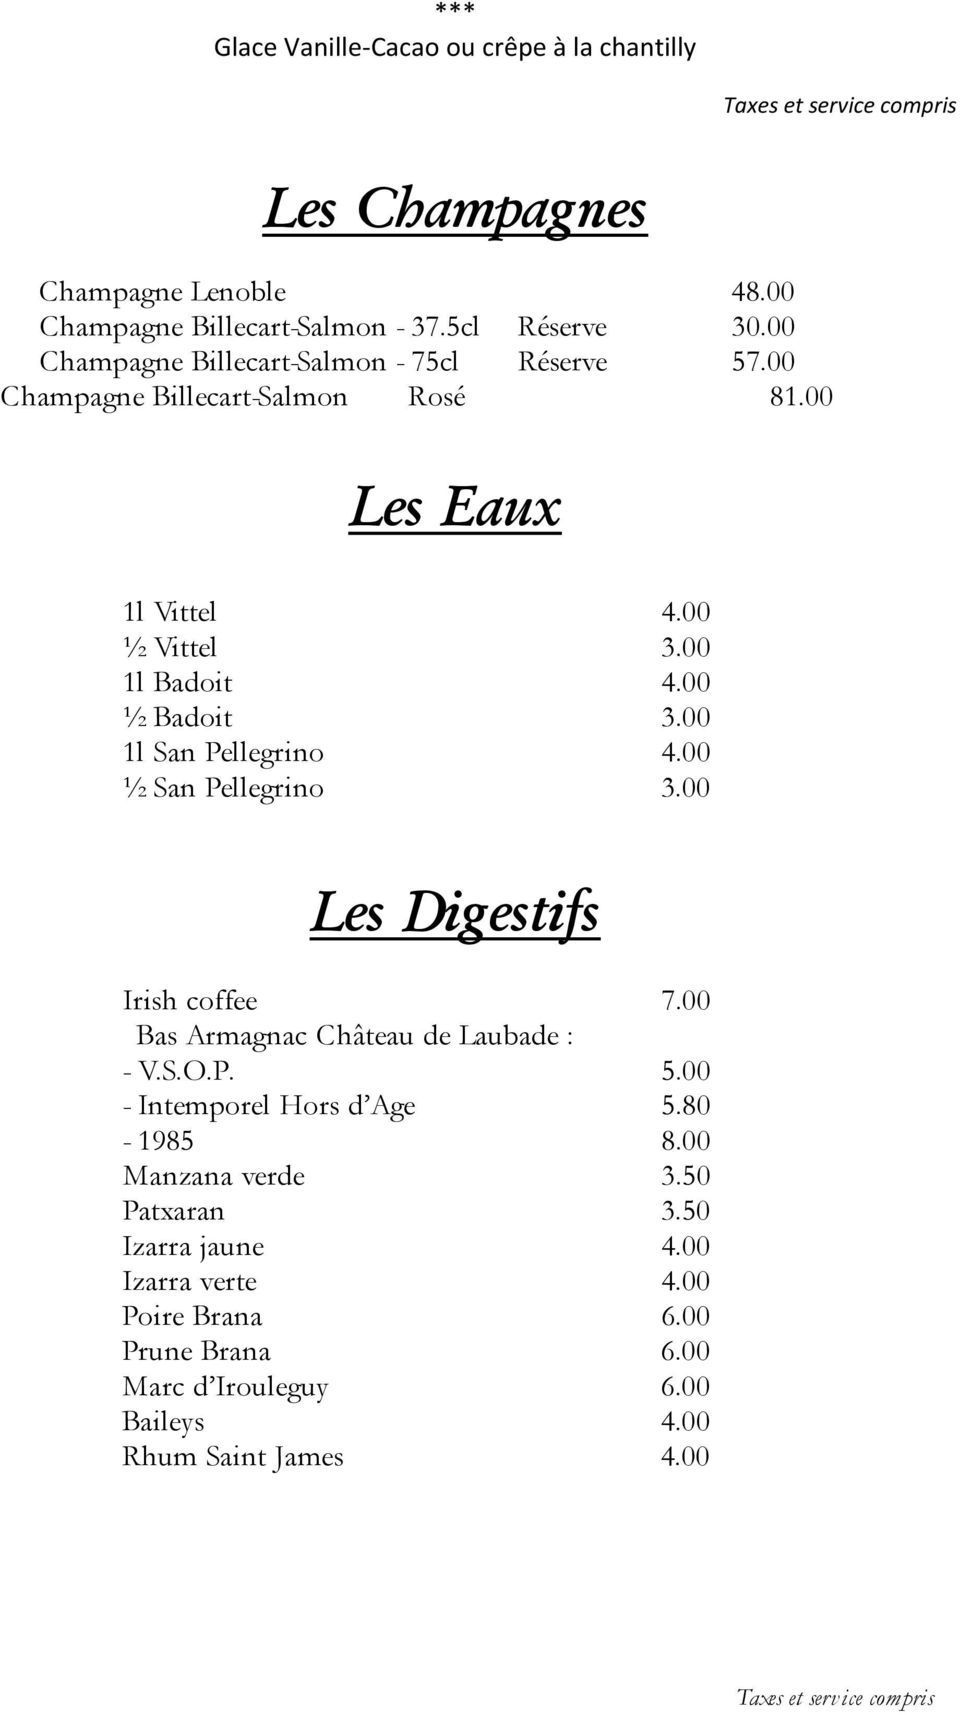 00 1l San Pellegrino 4.00 ½ San Pellegrino 3.00 Les Digestifs Irish coffee 7.00 Bas Armagnac Château de Laubade : - V.S.O.P. 5.00 - Intemporel Hors d Age 5.80-1985 8.